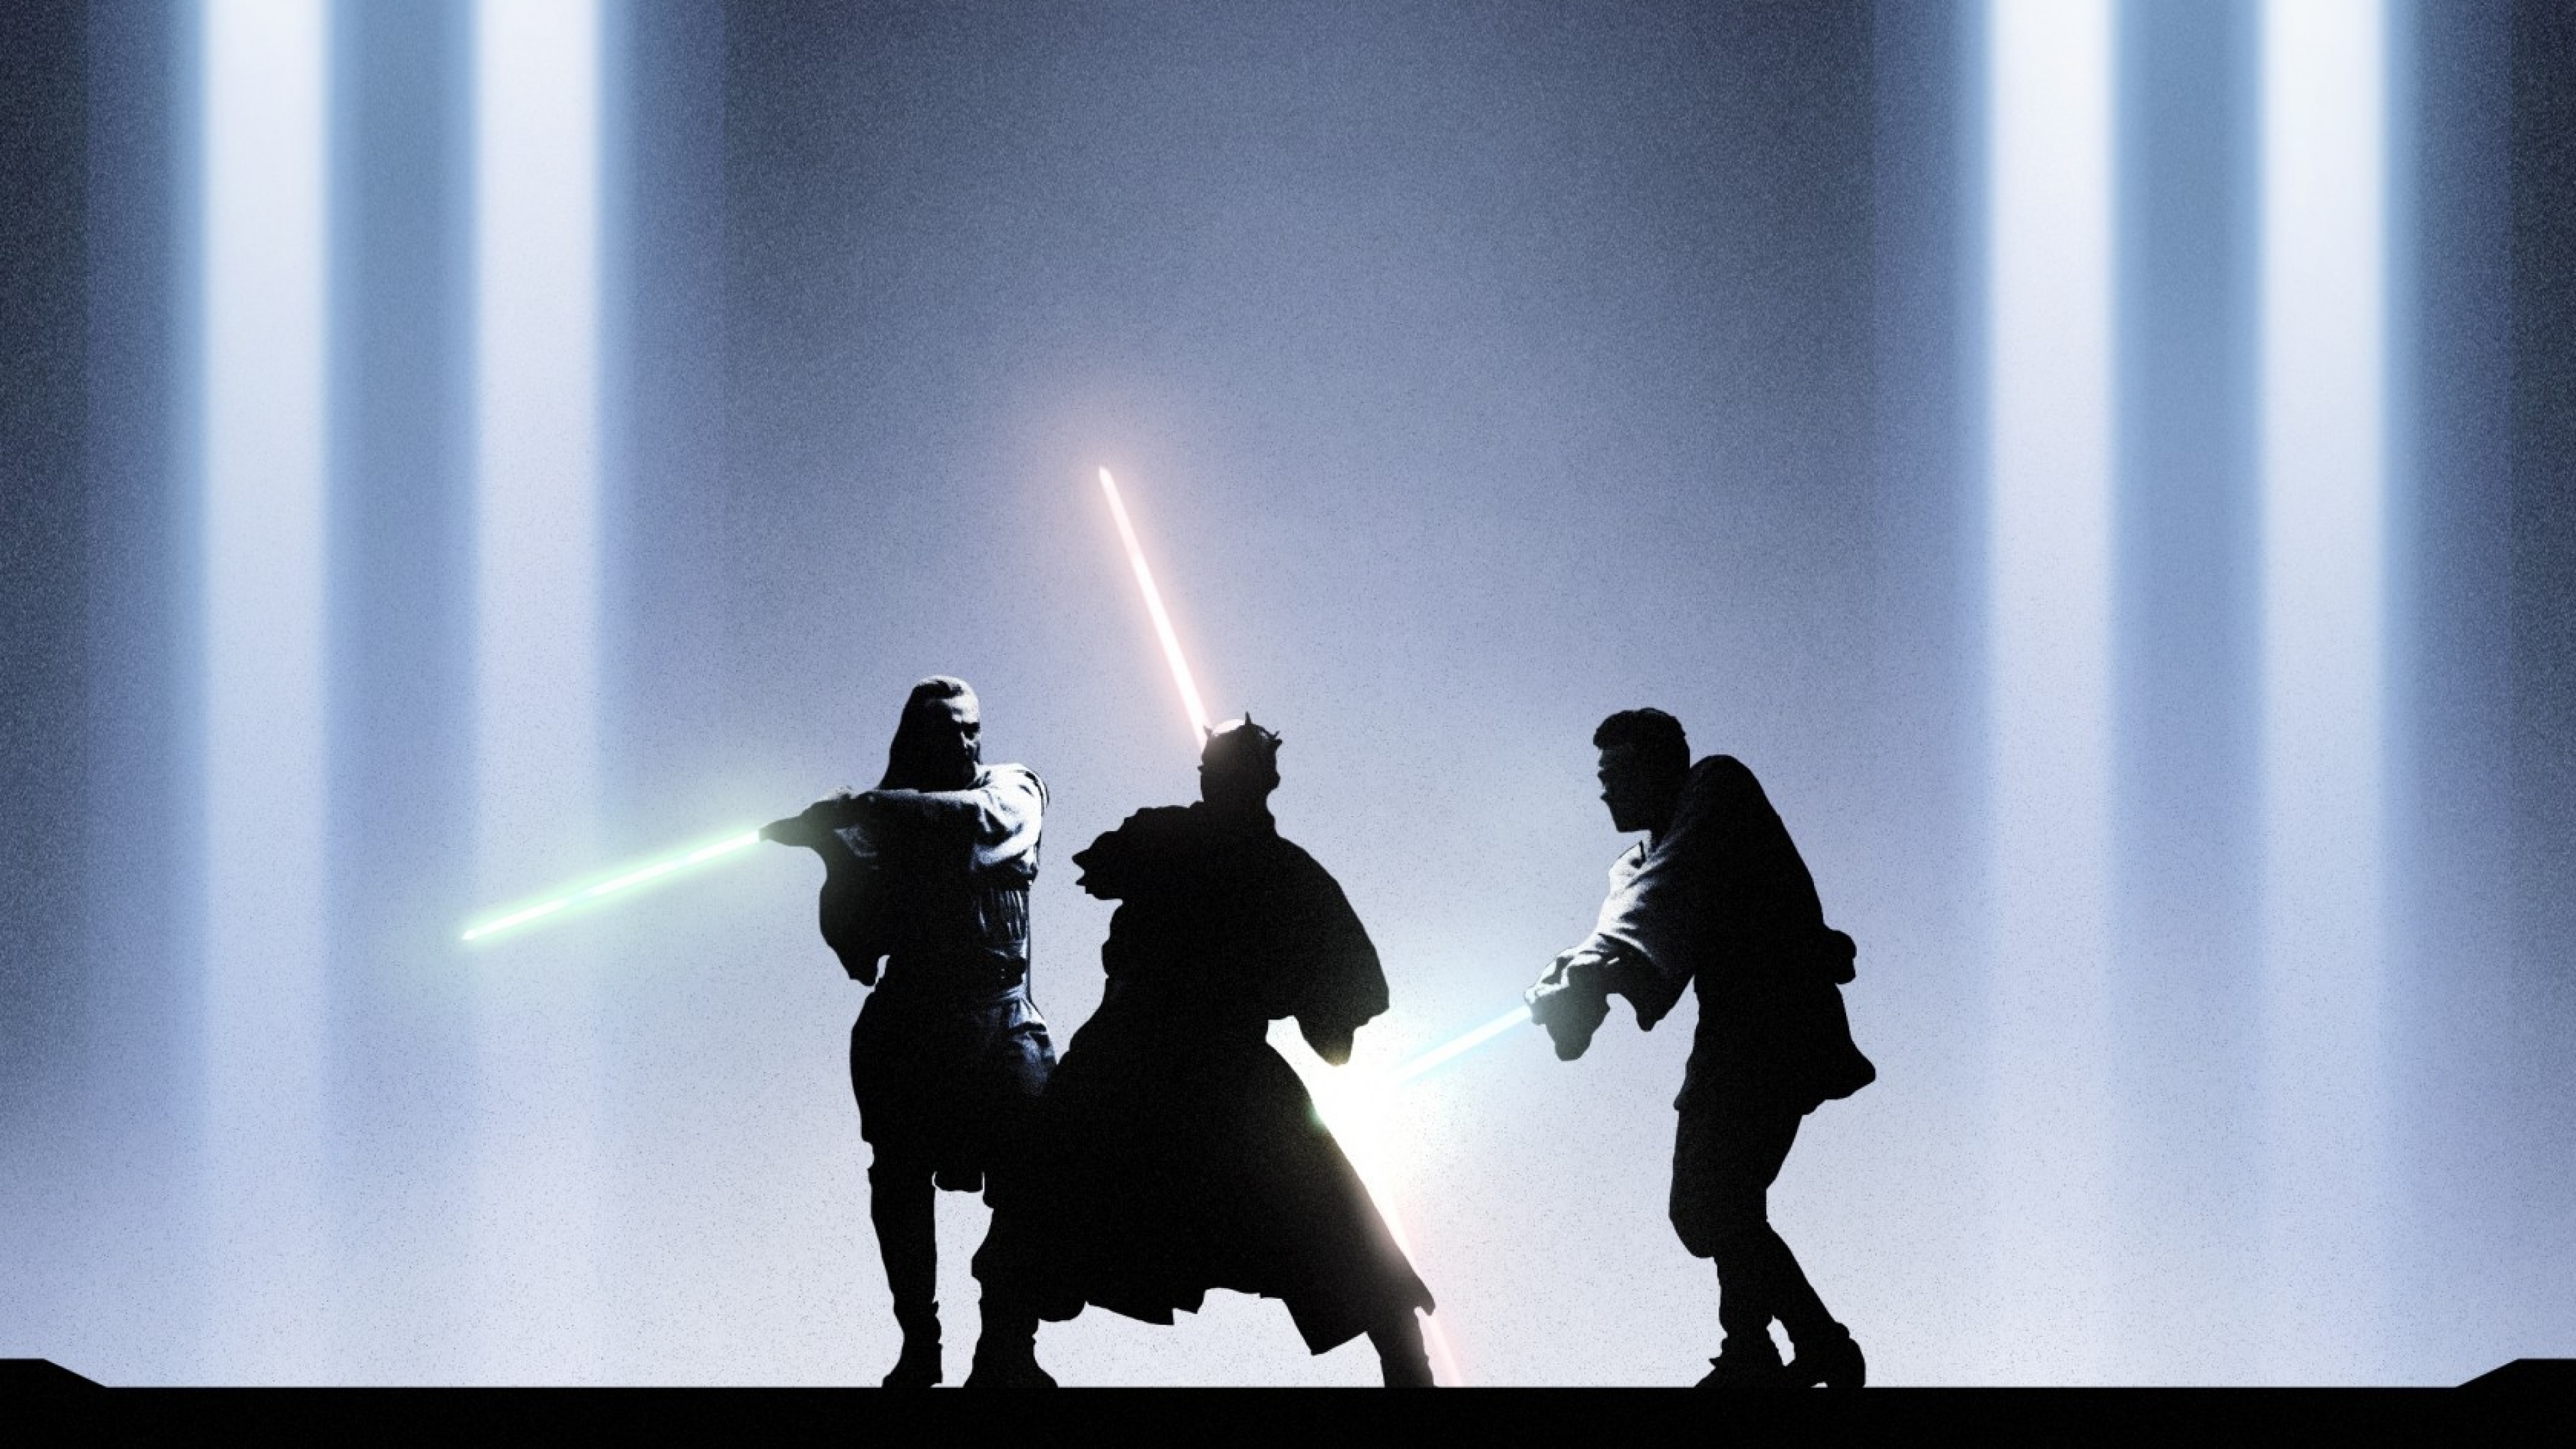 Star Wars Episode I: The Phantom Menace Picture